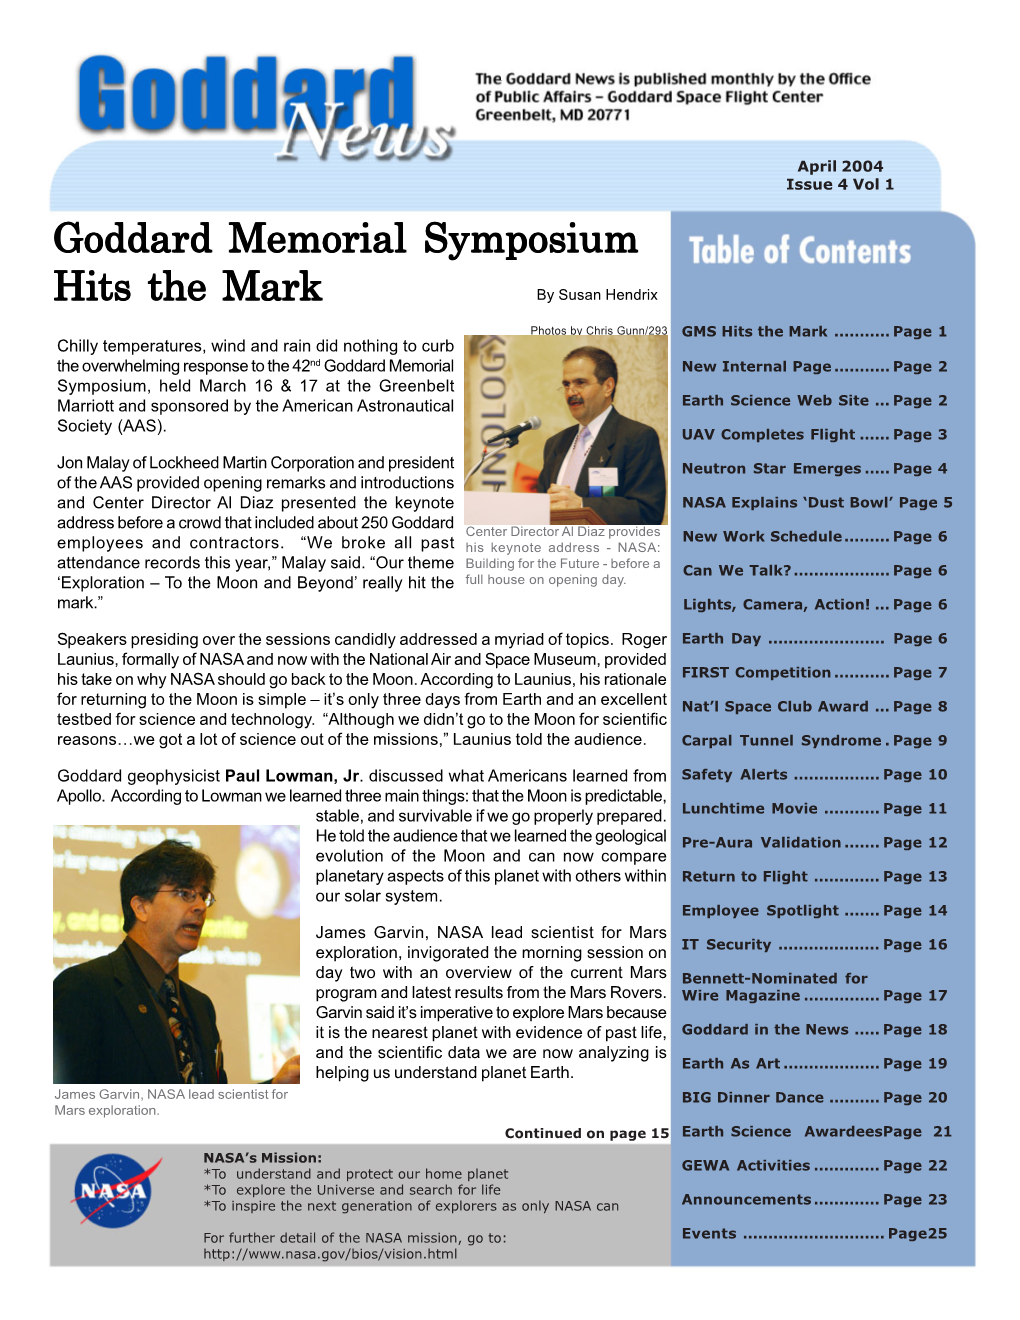 Goddard Memorial Symposium Hits the Mark